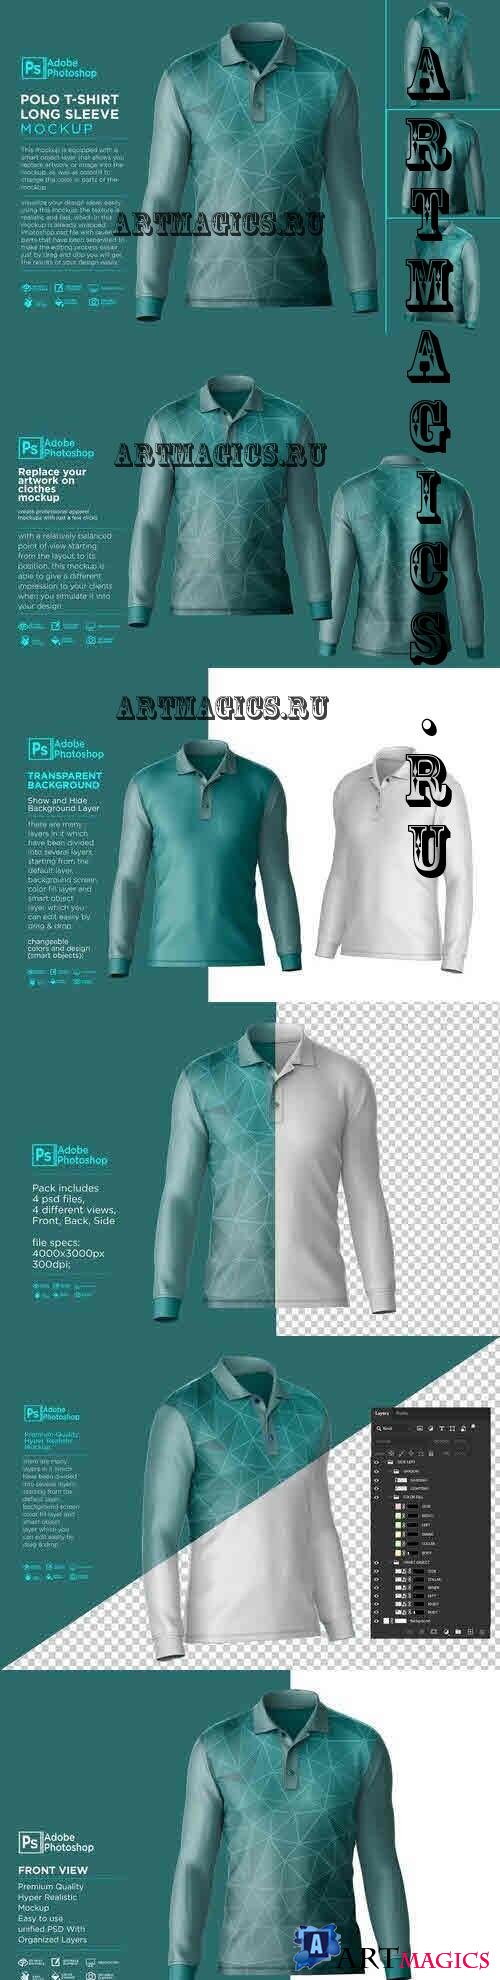 Polo T-Shirt Long Sleeve - 7510451